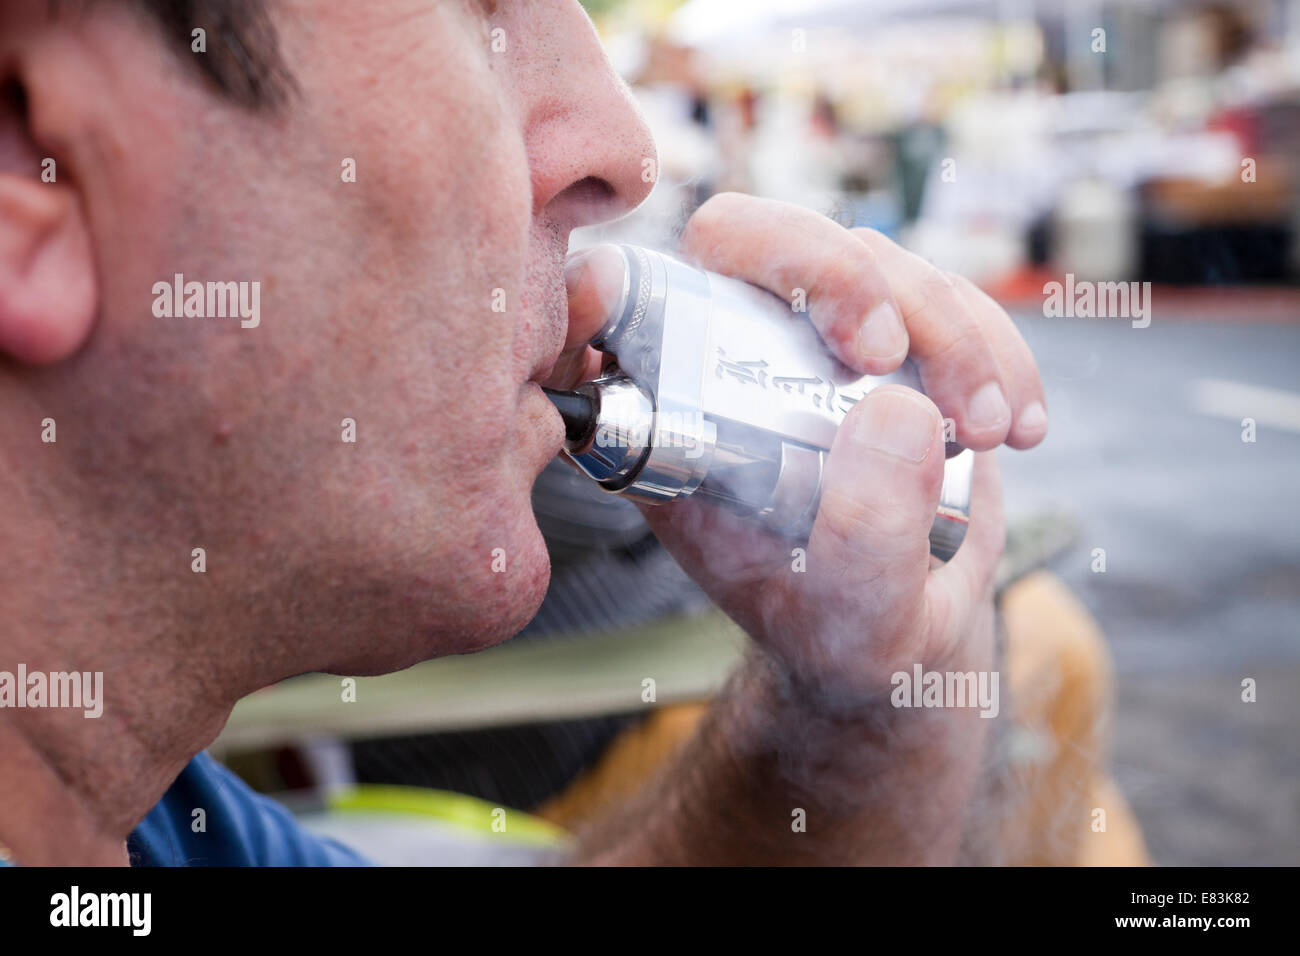 Man using portable nicotine vaporizer - USA Stock Photo